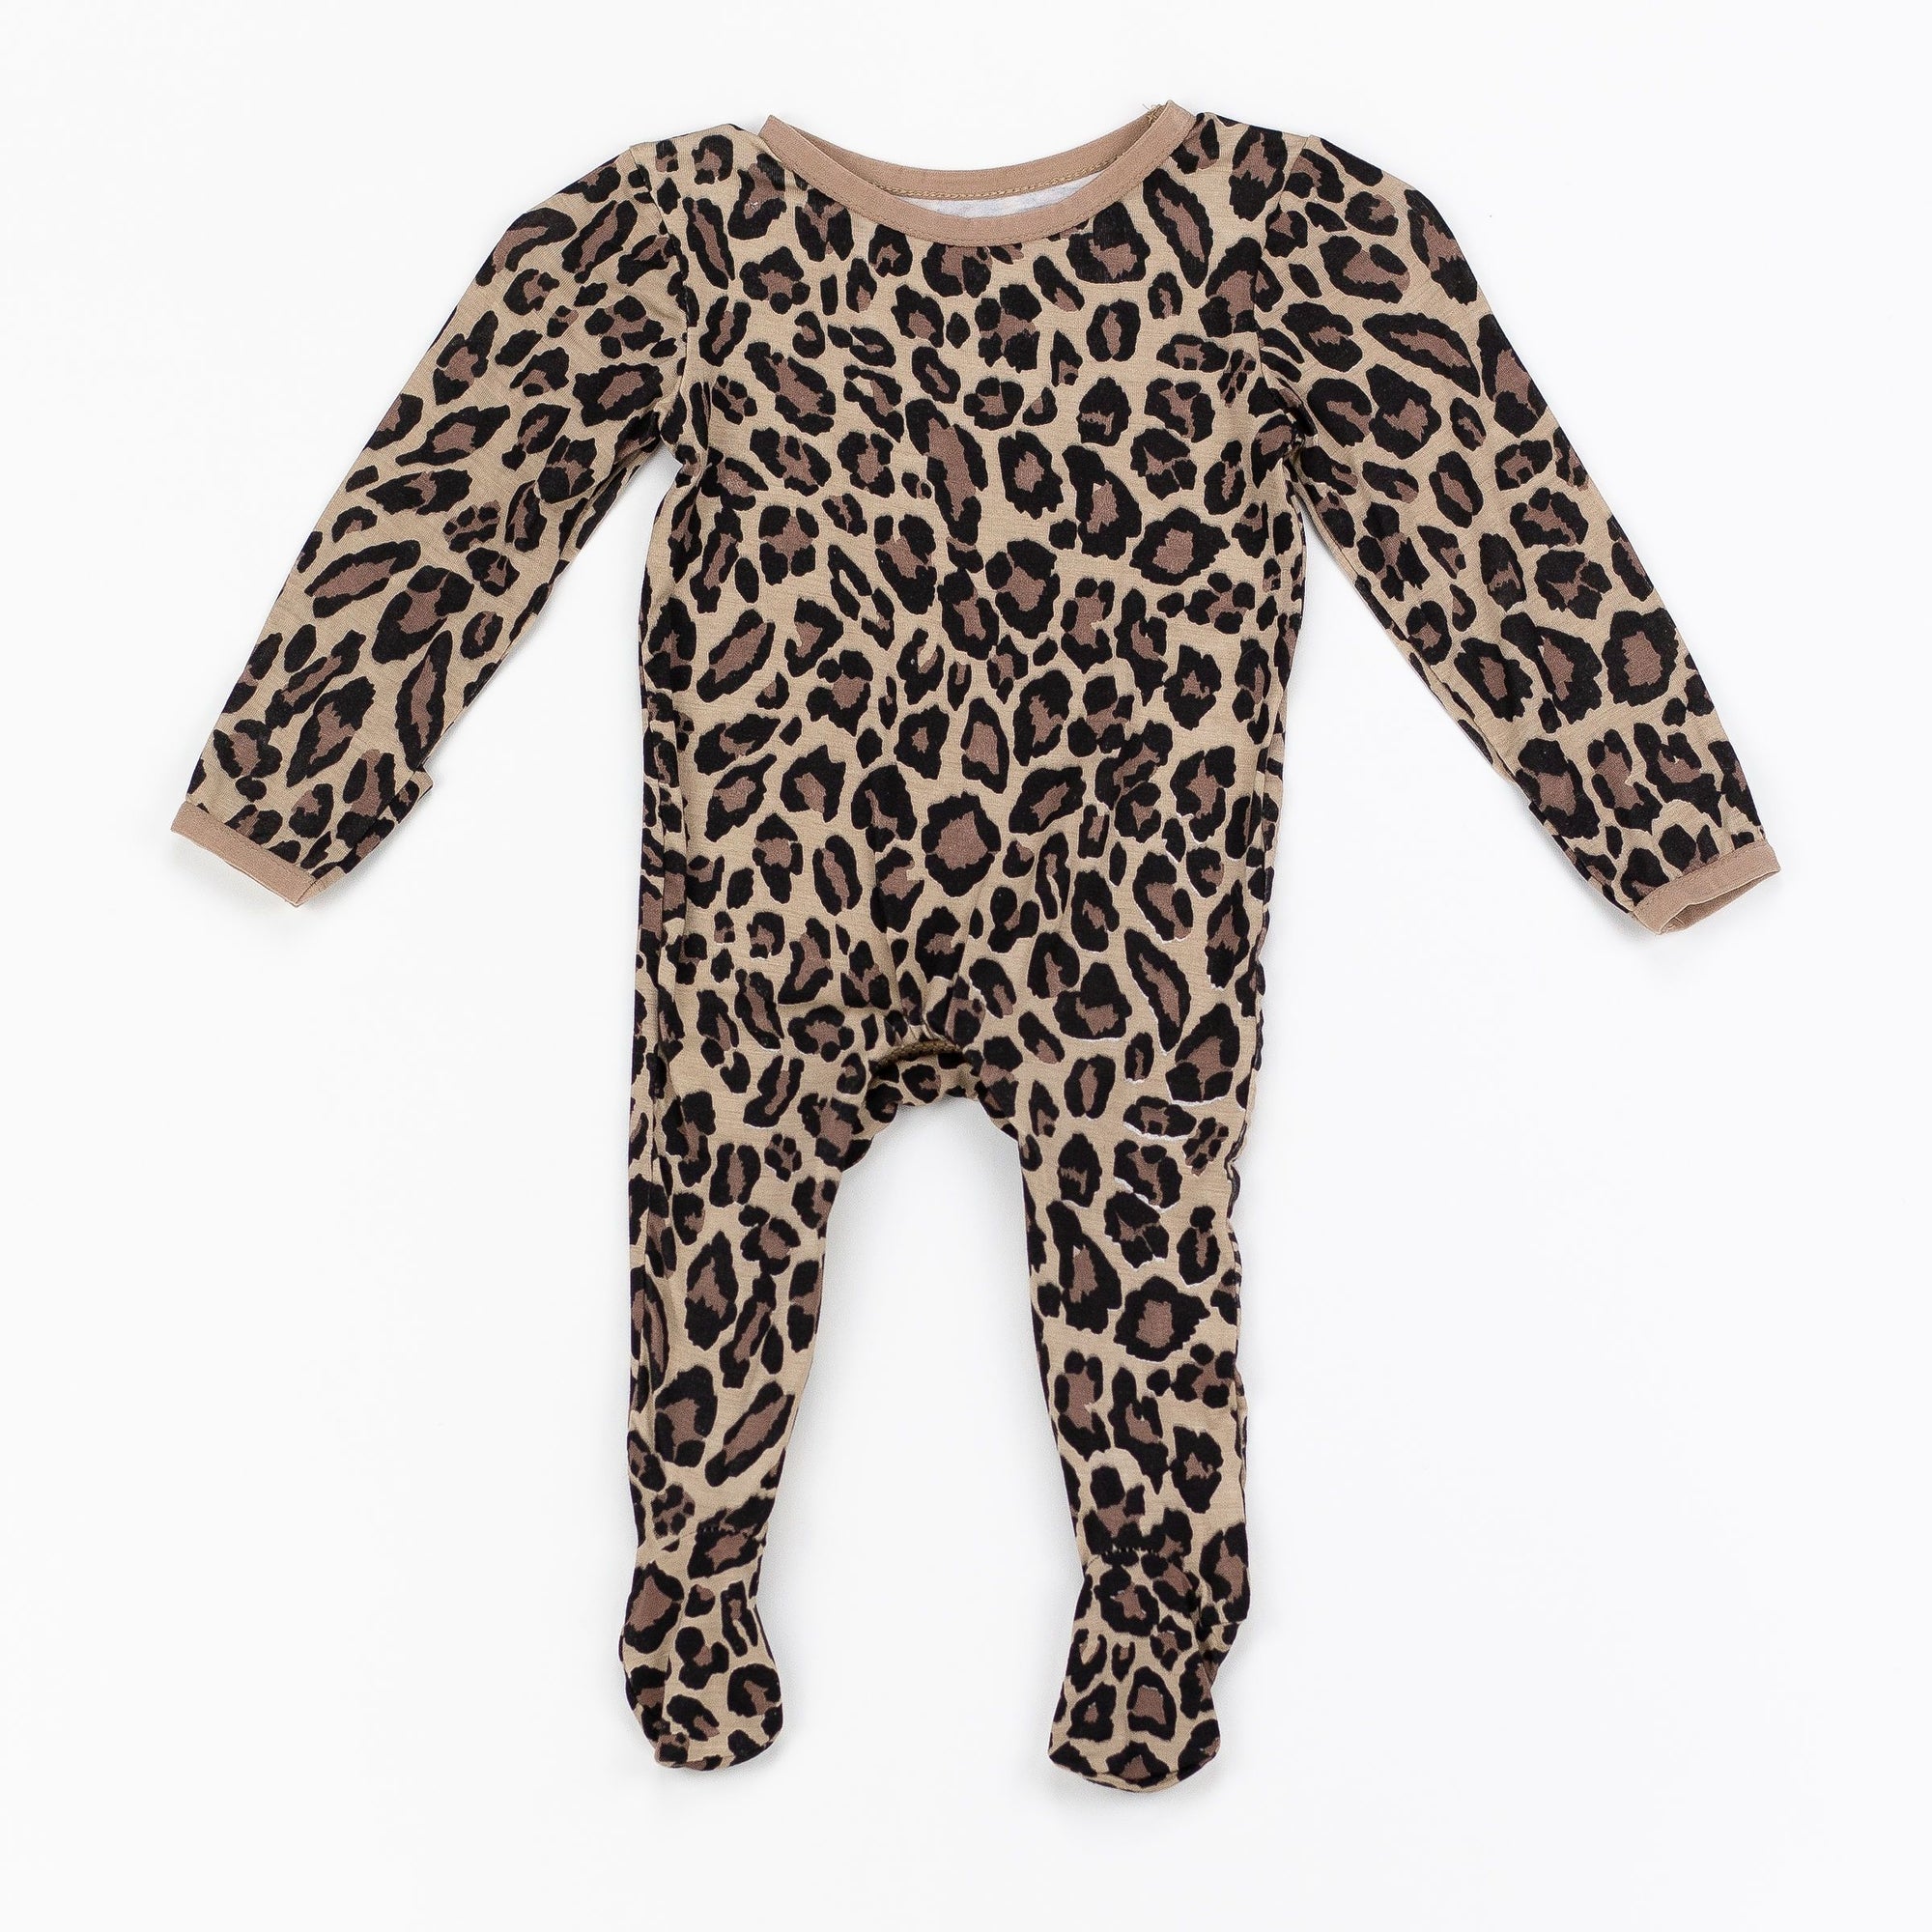 leopard printed sleeper